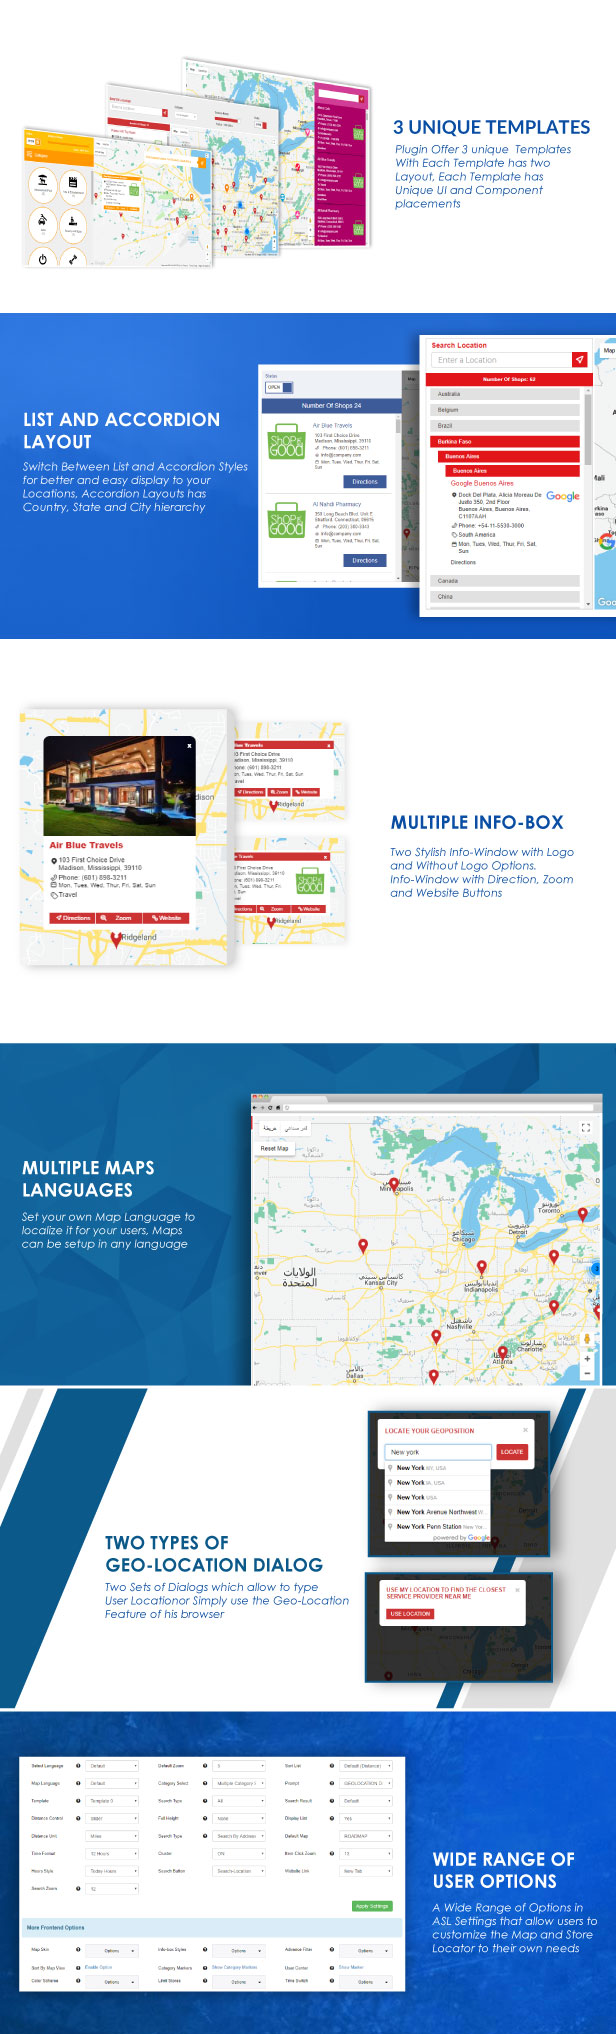 Store Locator (Google Maps) For WordPress - 6